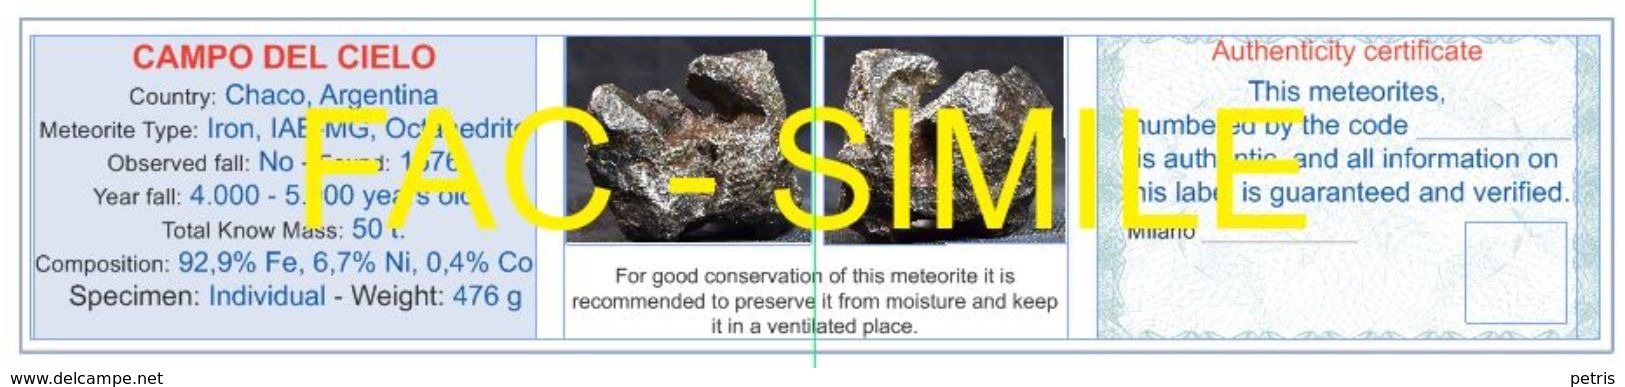 Meteorite Campo Del Cielo, Argentina 427 G. With Authenticity Certificate - Lot. M019 - Meteorieten